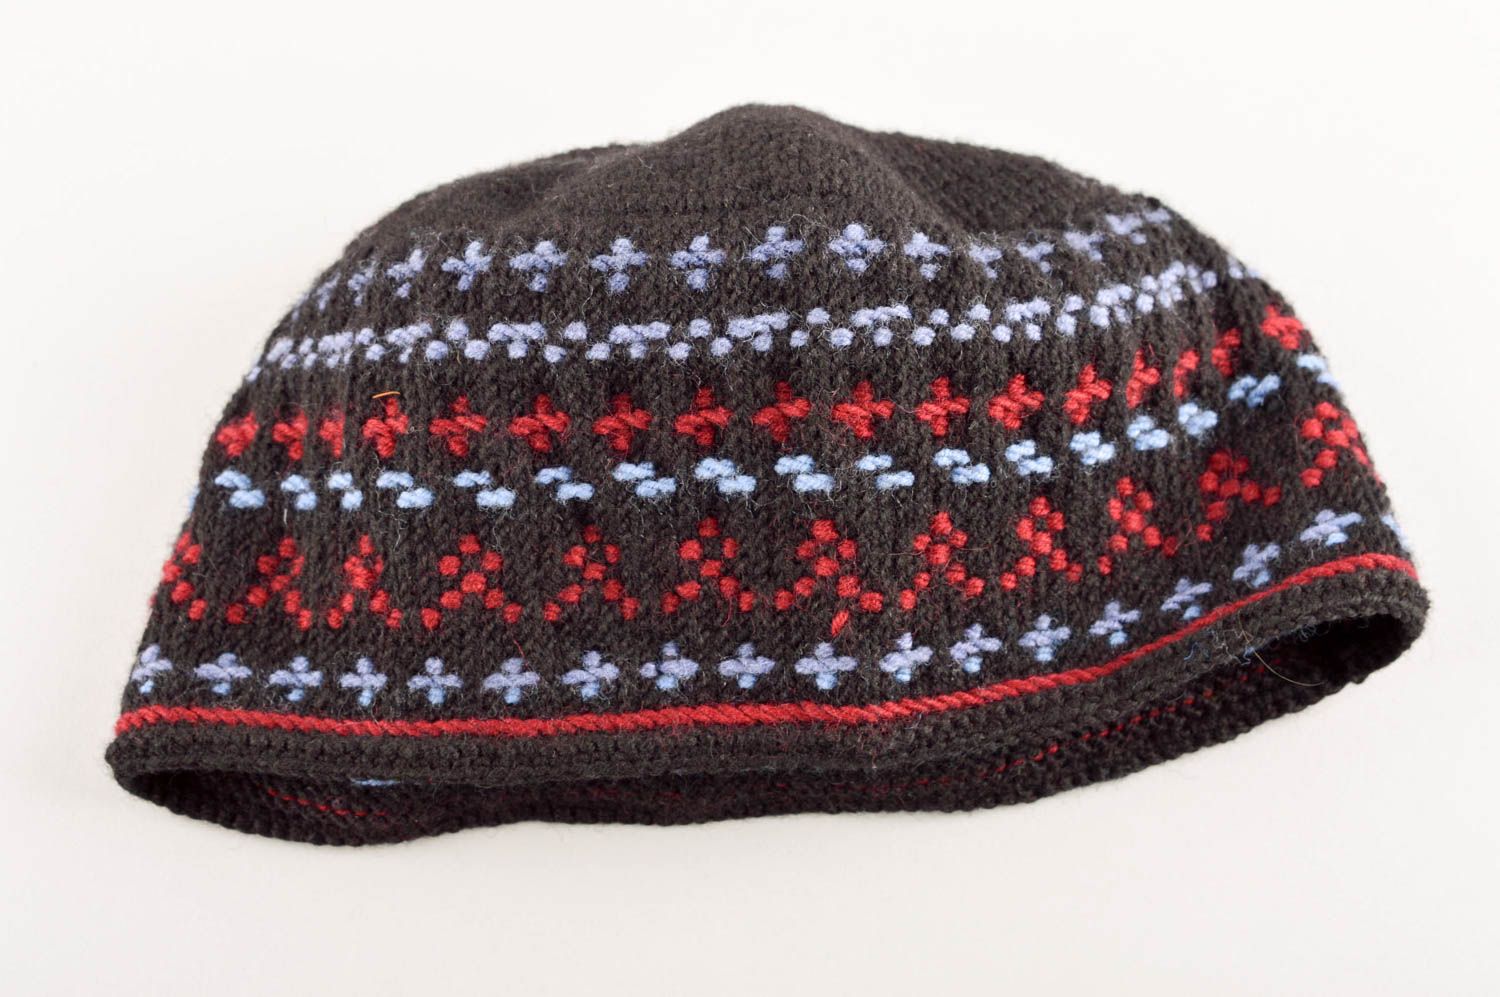 Beautiful handmade crochet hat warm winter hat head accessories for girls photo 4